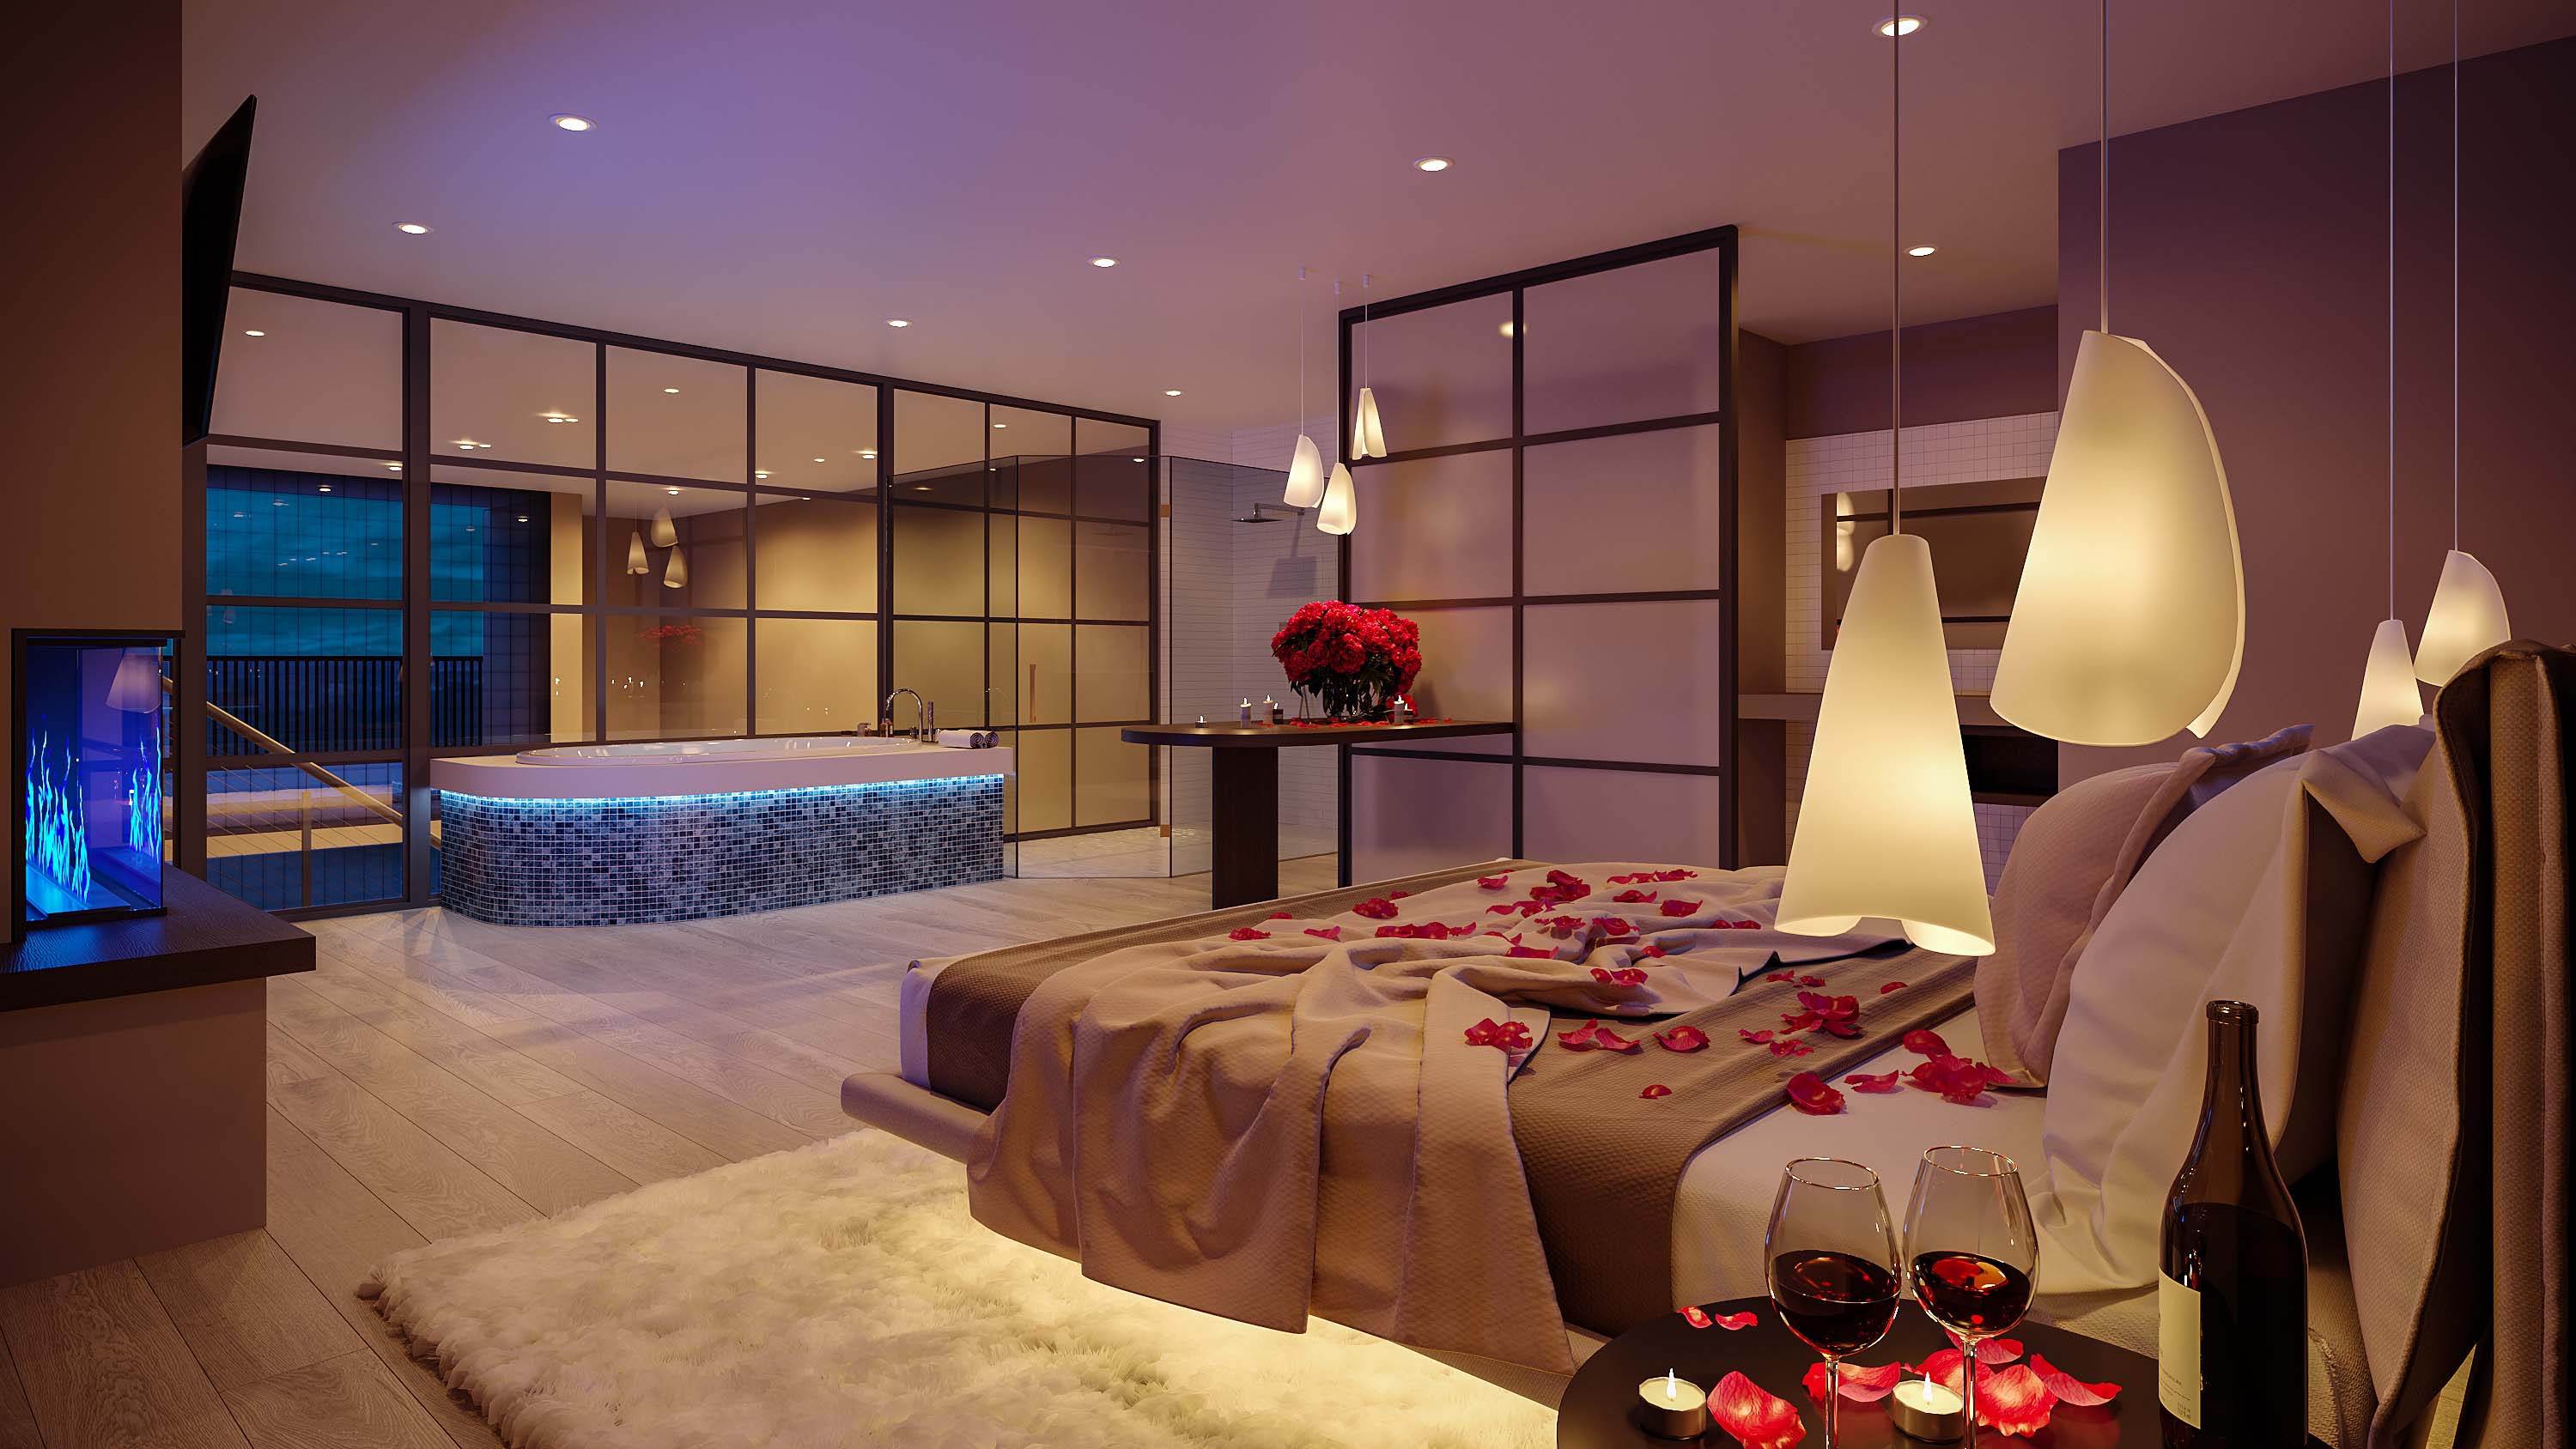 Cabana suites interiors bedroom night Applet3D